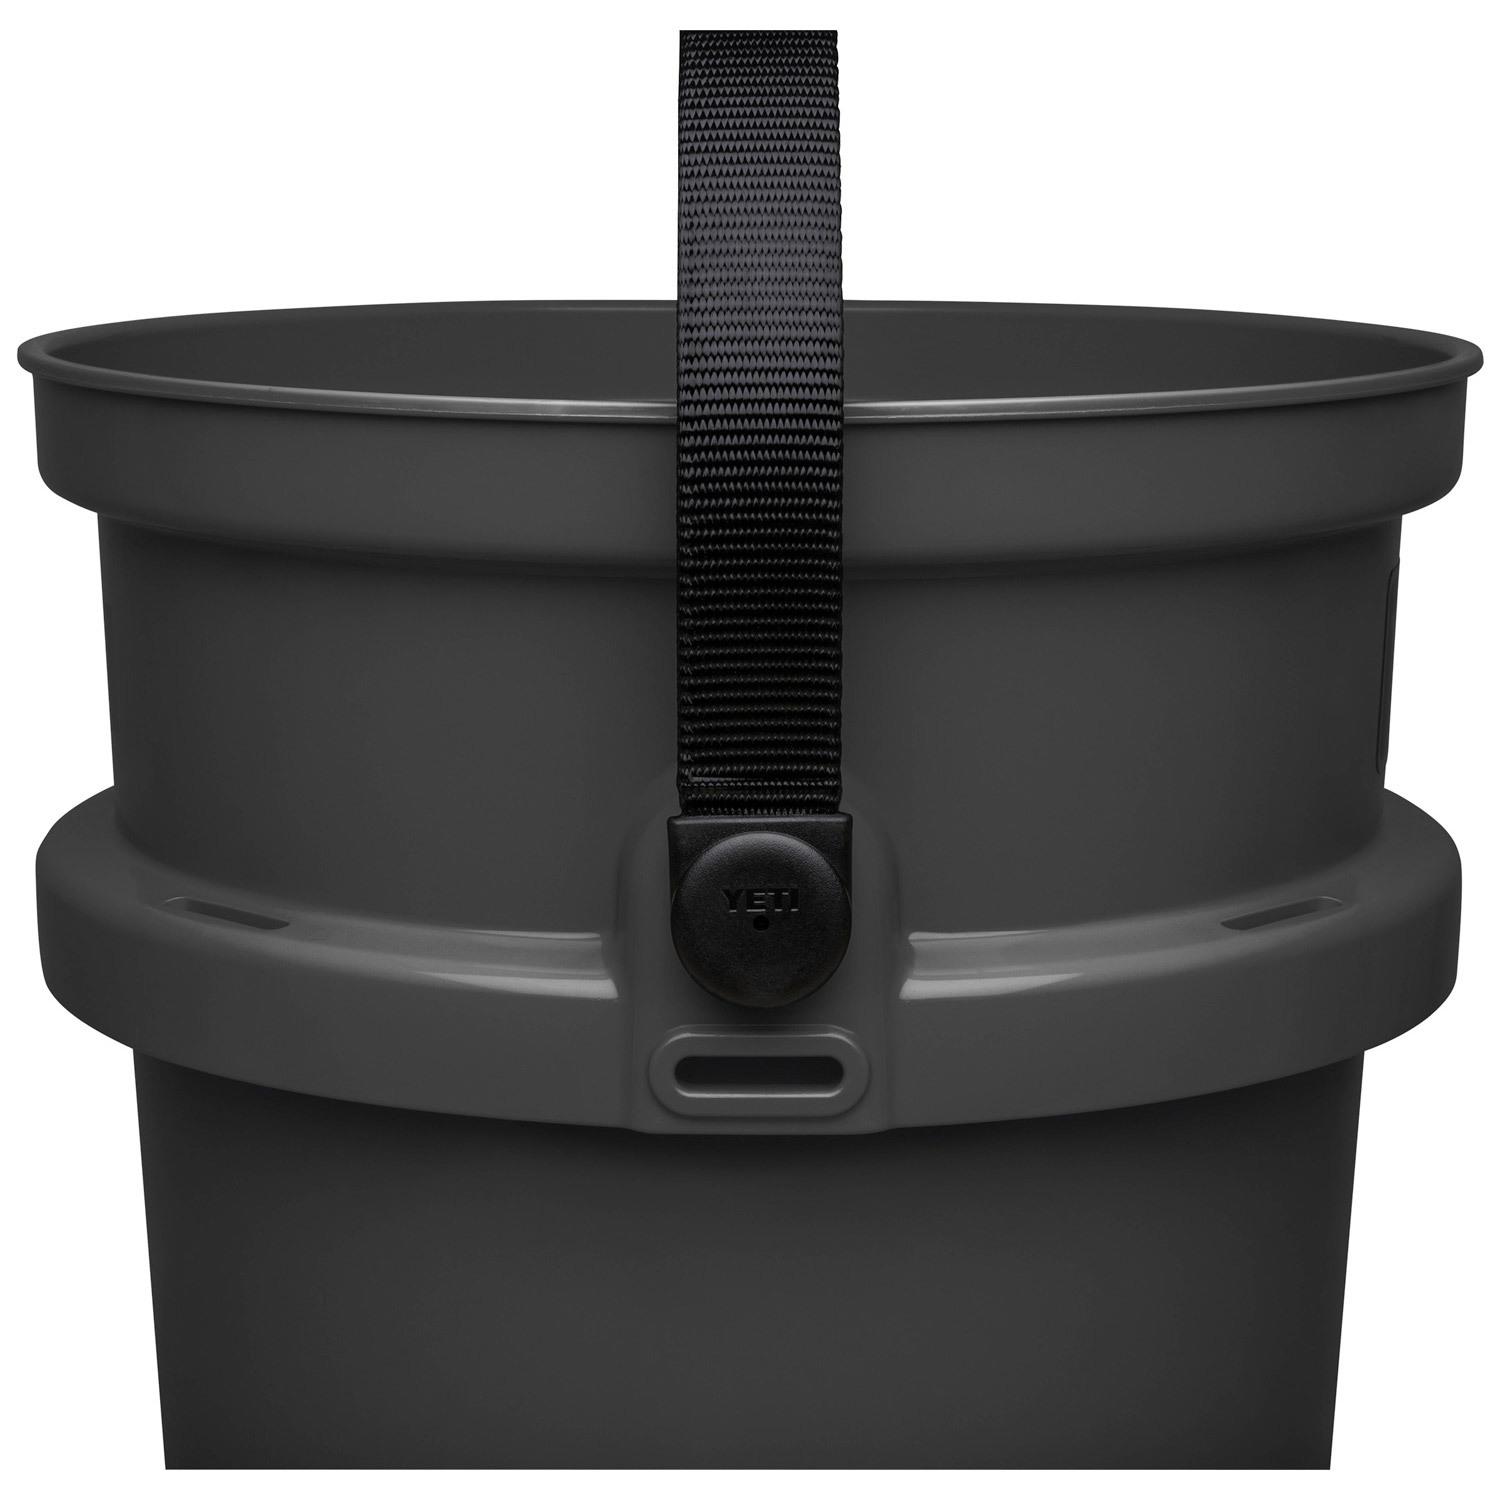 Yeti Loadout 5 Gallon Bucket - Marine General - Buckets & Accessories